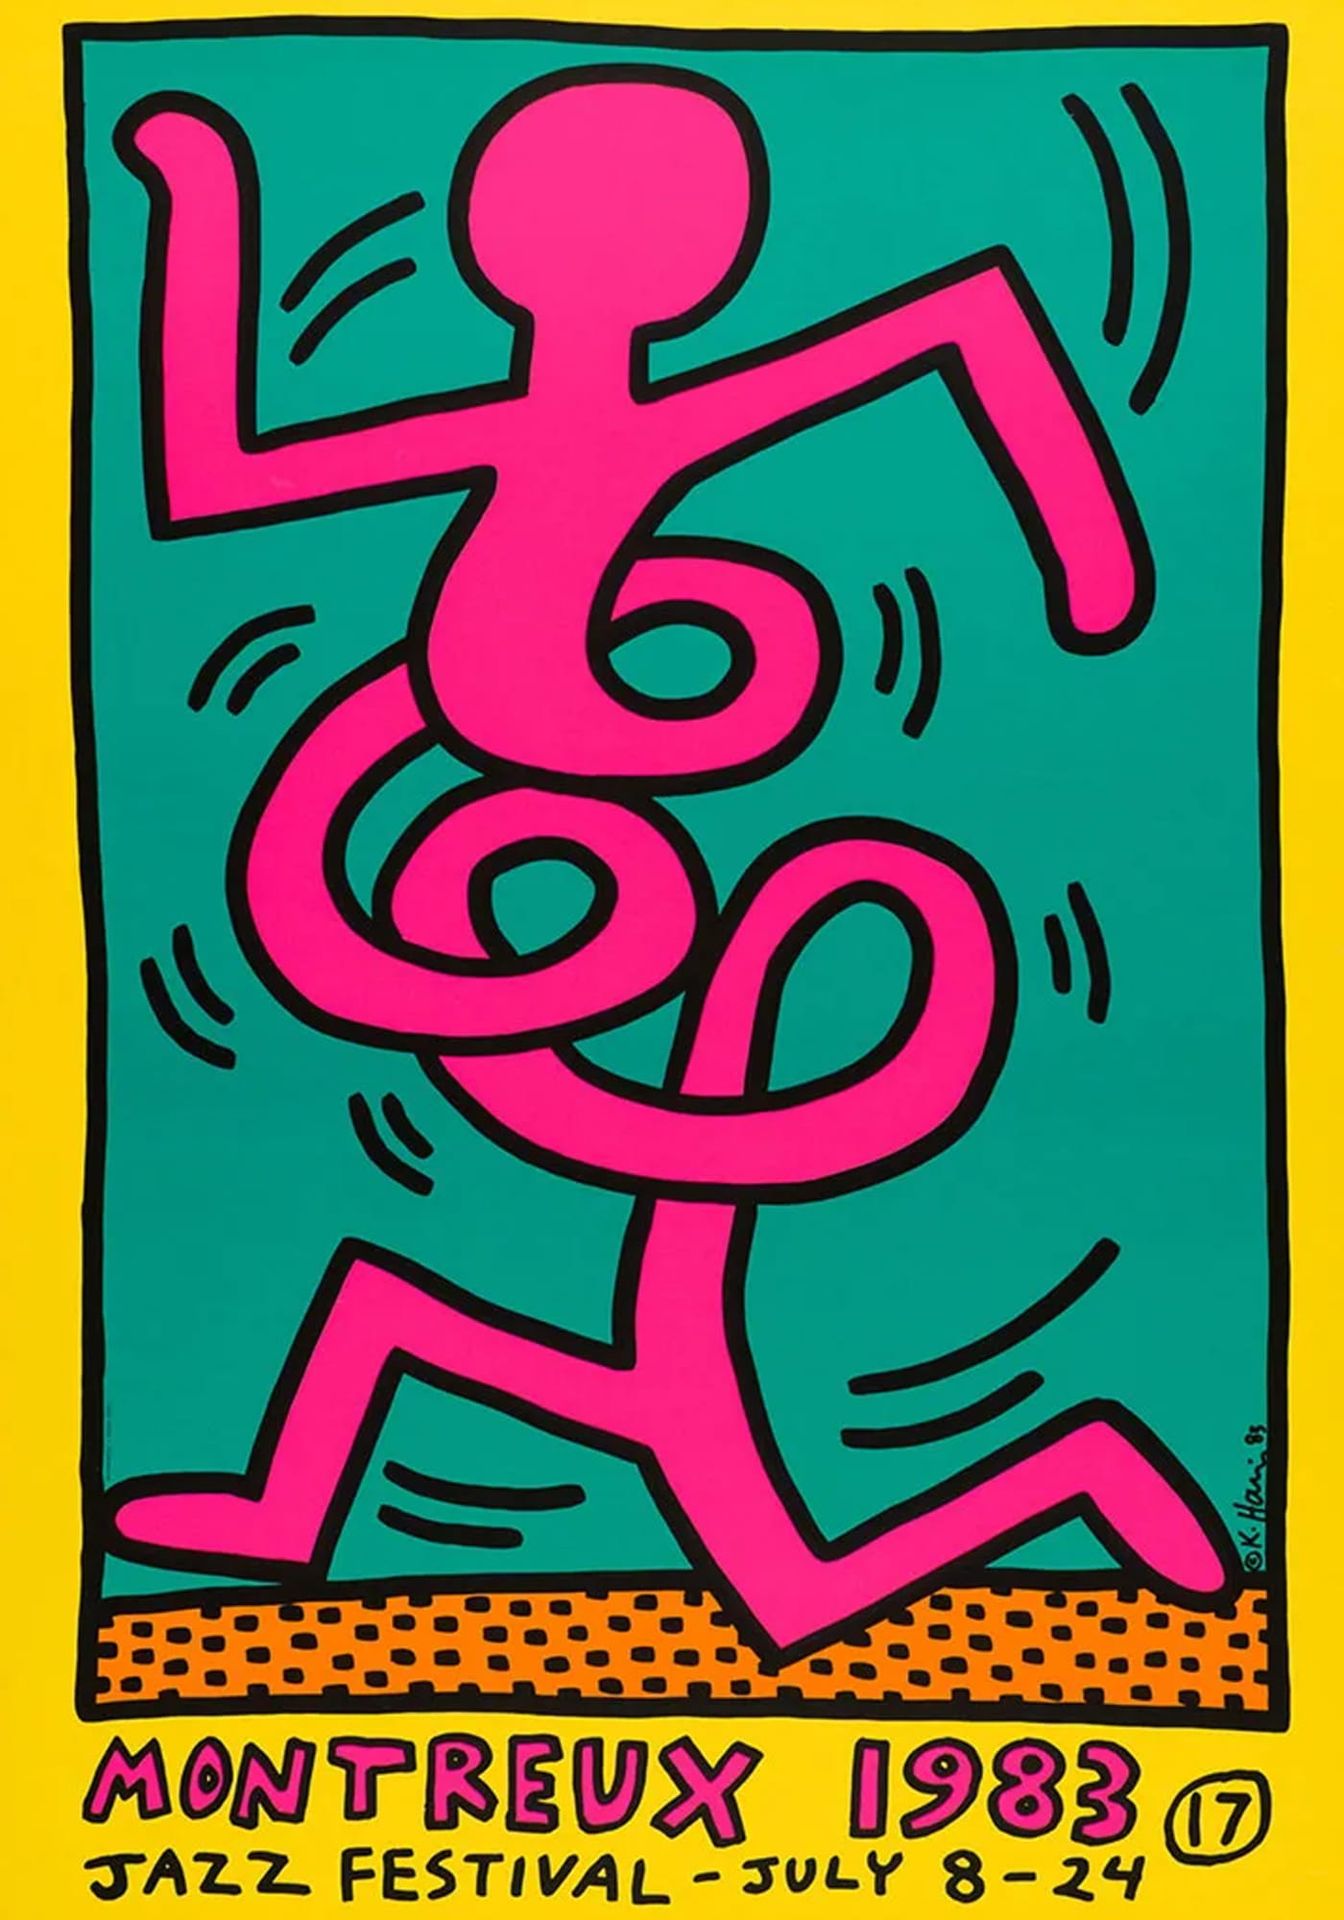 Null Keith Haring (después), cartel de Montreux Pink Man, 1983 

Papel para cart&hellip;